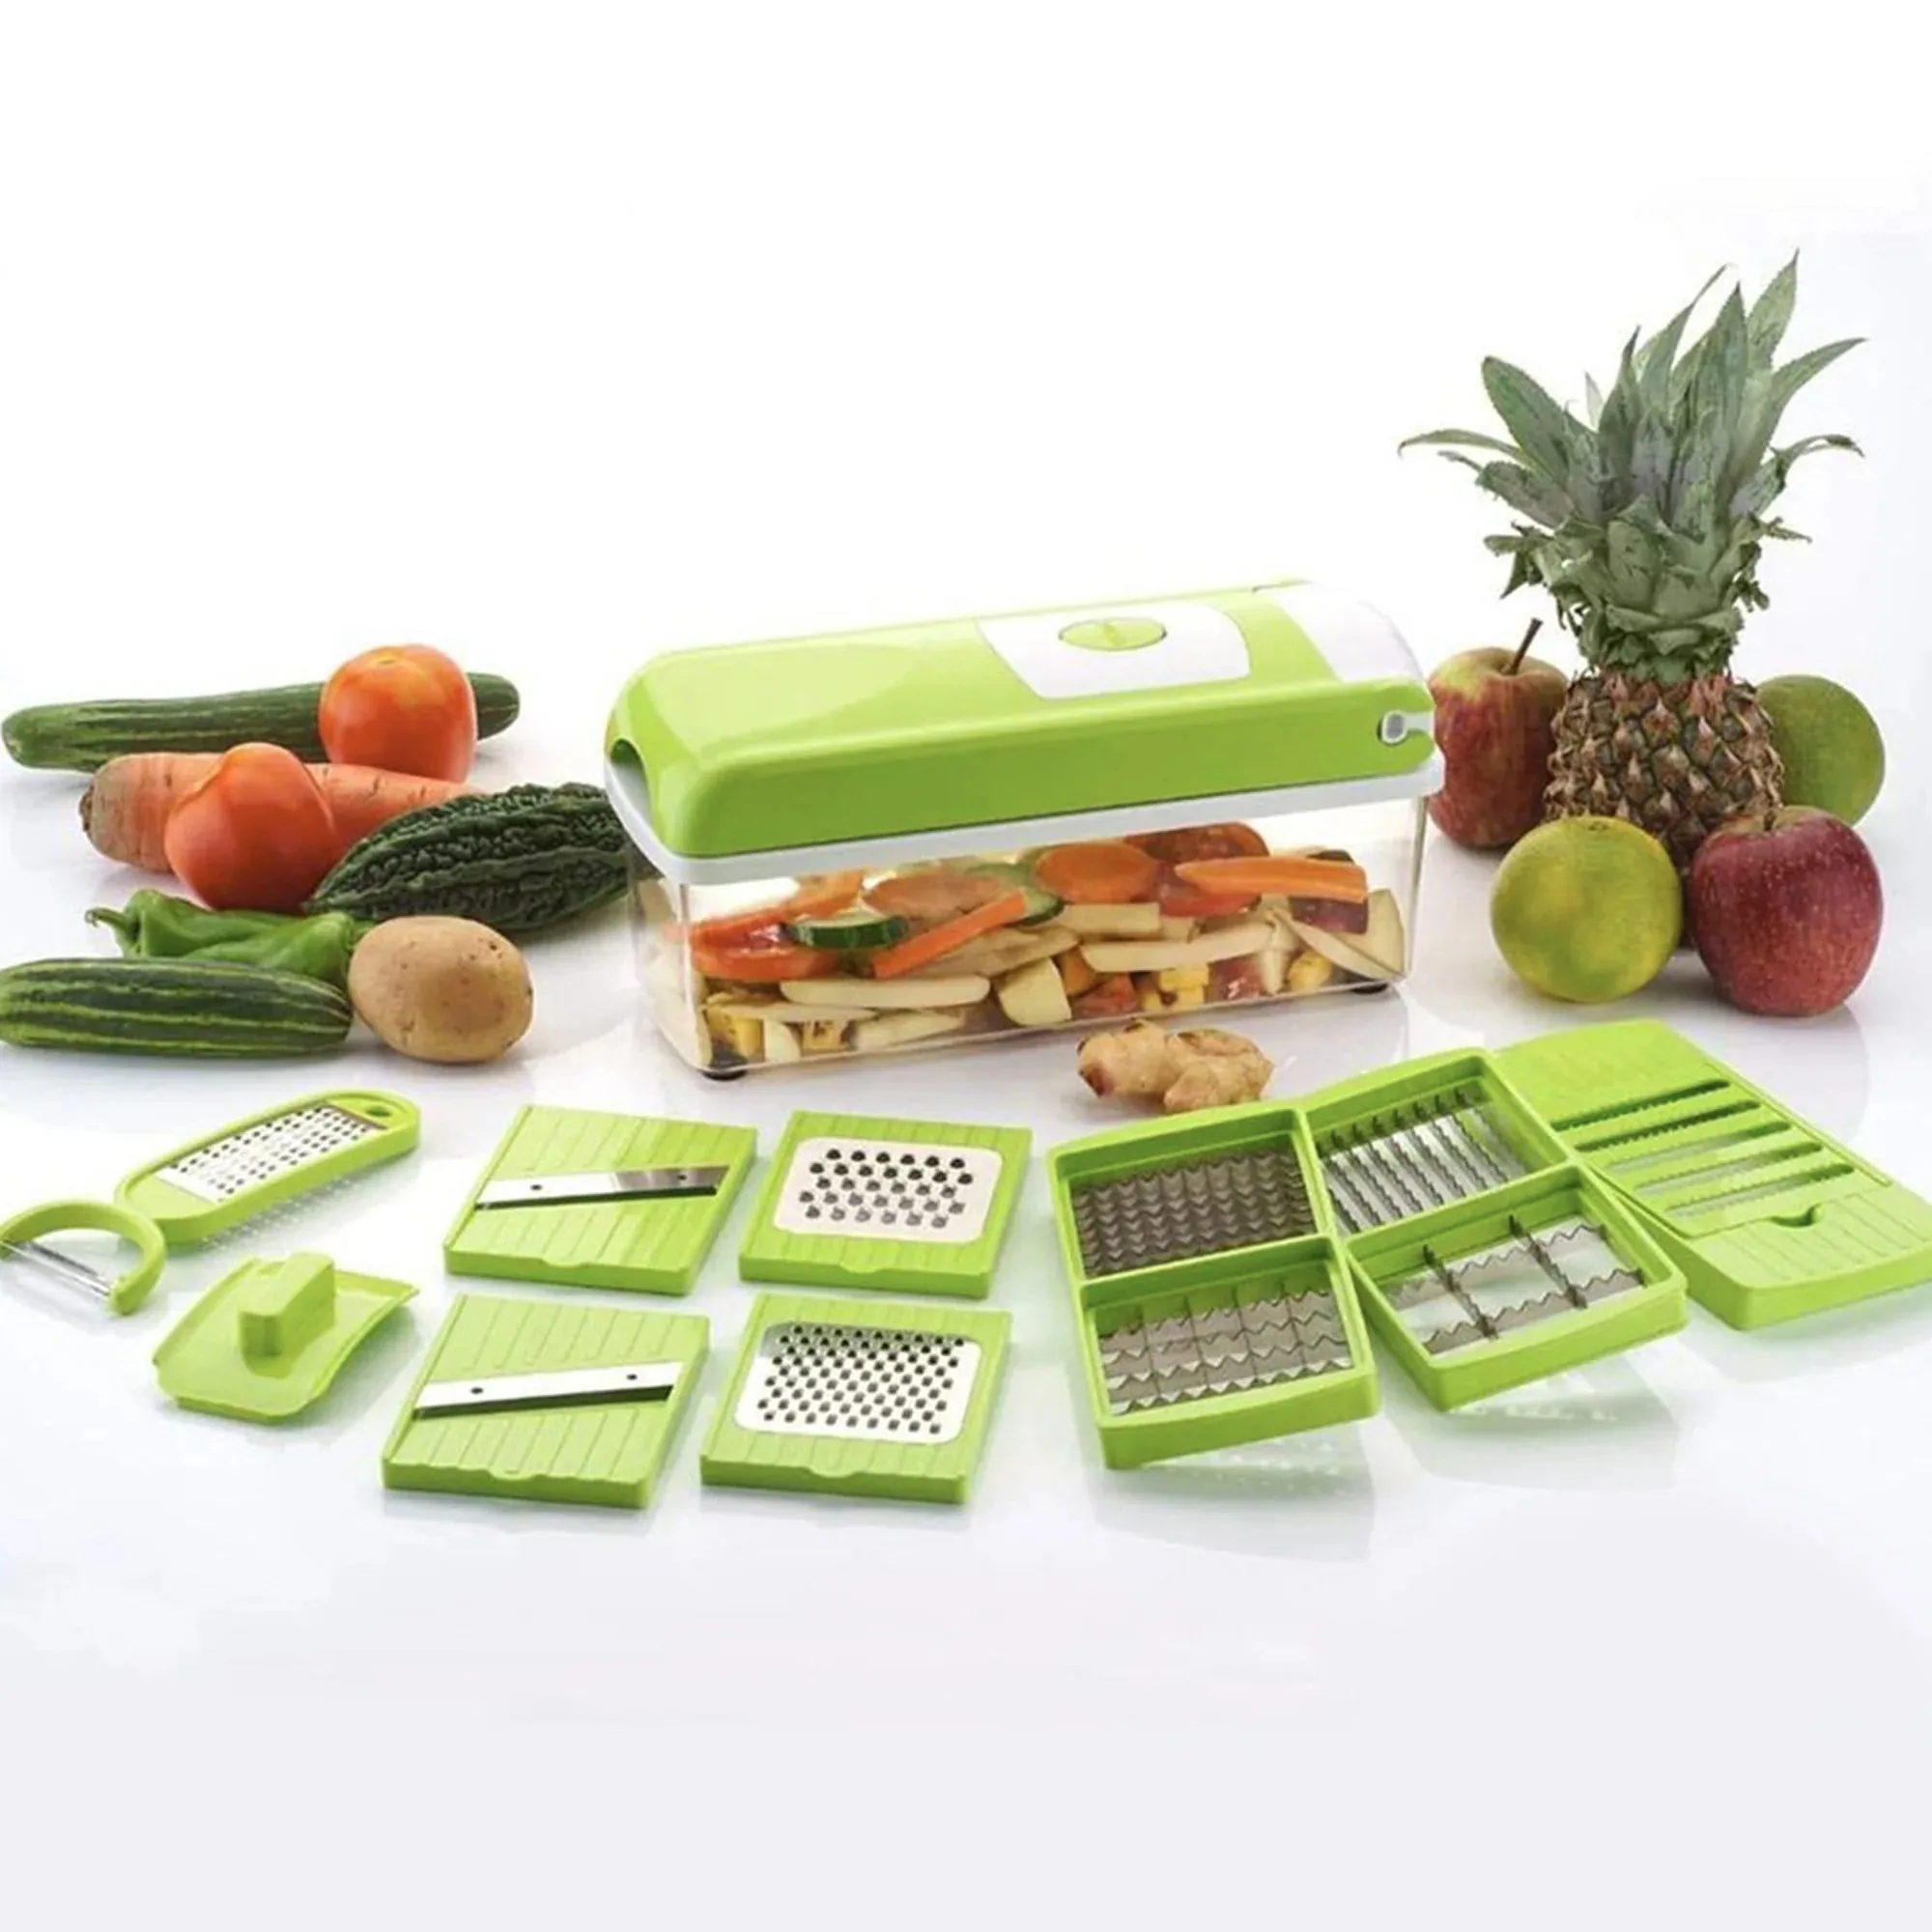 PLATINUM-16_1-Quicker-Vegetable-chipser-slicer-grater-Chopper-Vegetable-Fruit-Grater-Slicer-1-Chopper-16-slicer